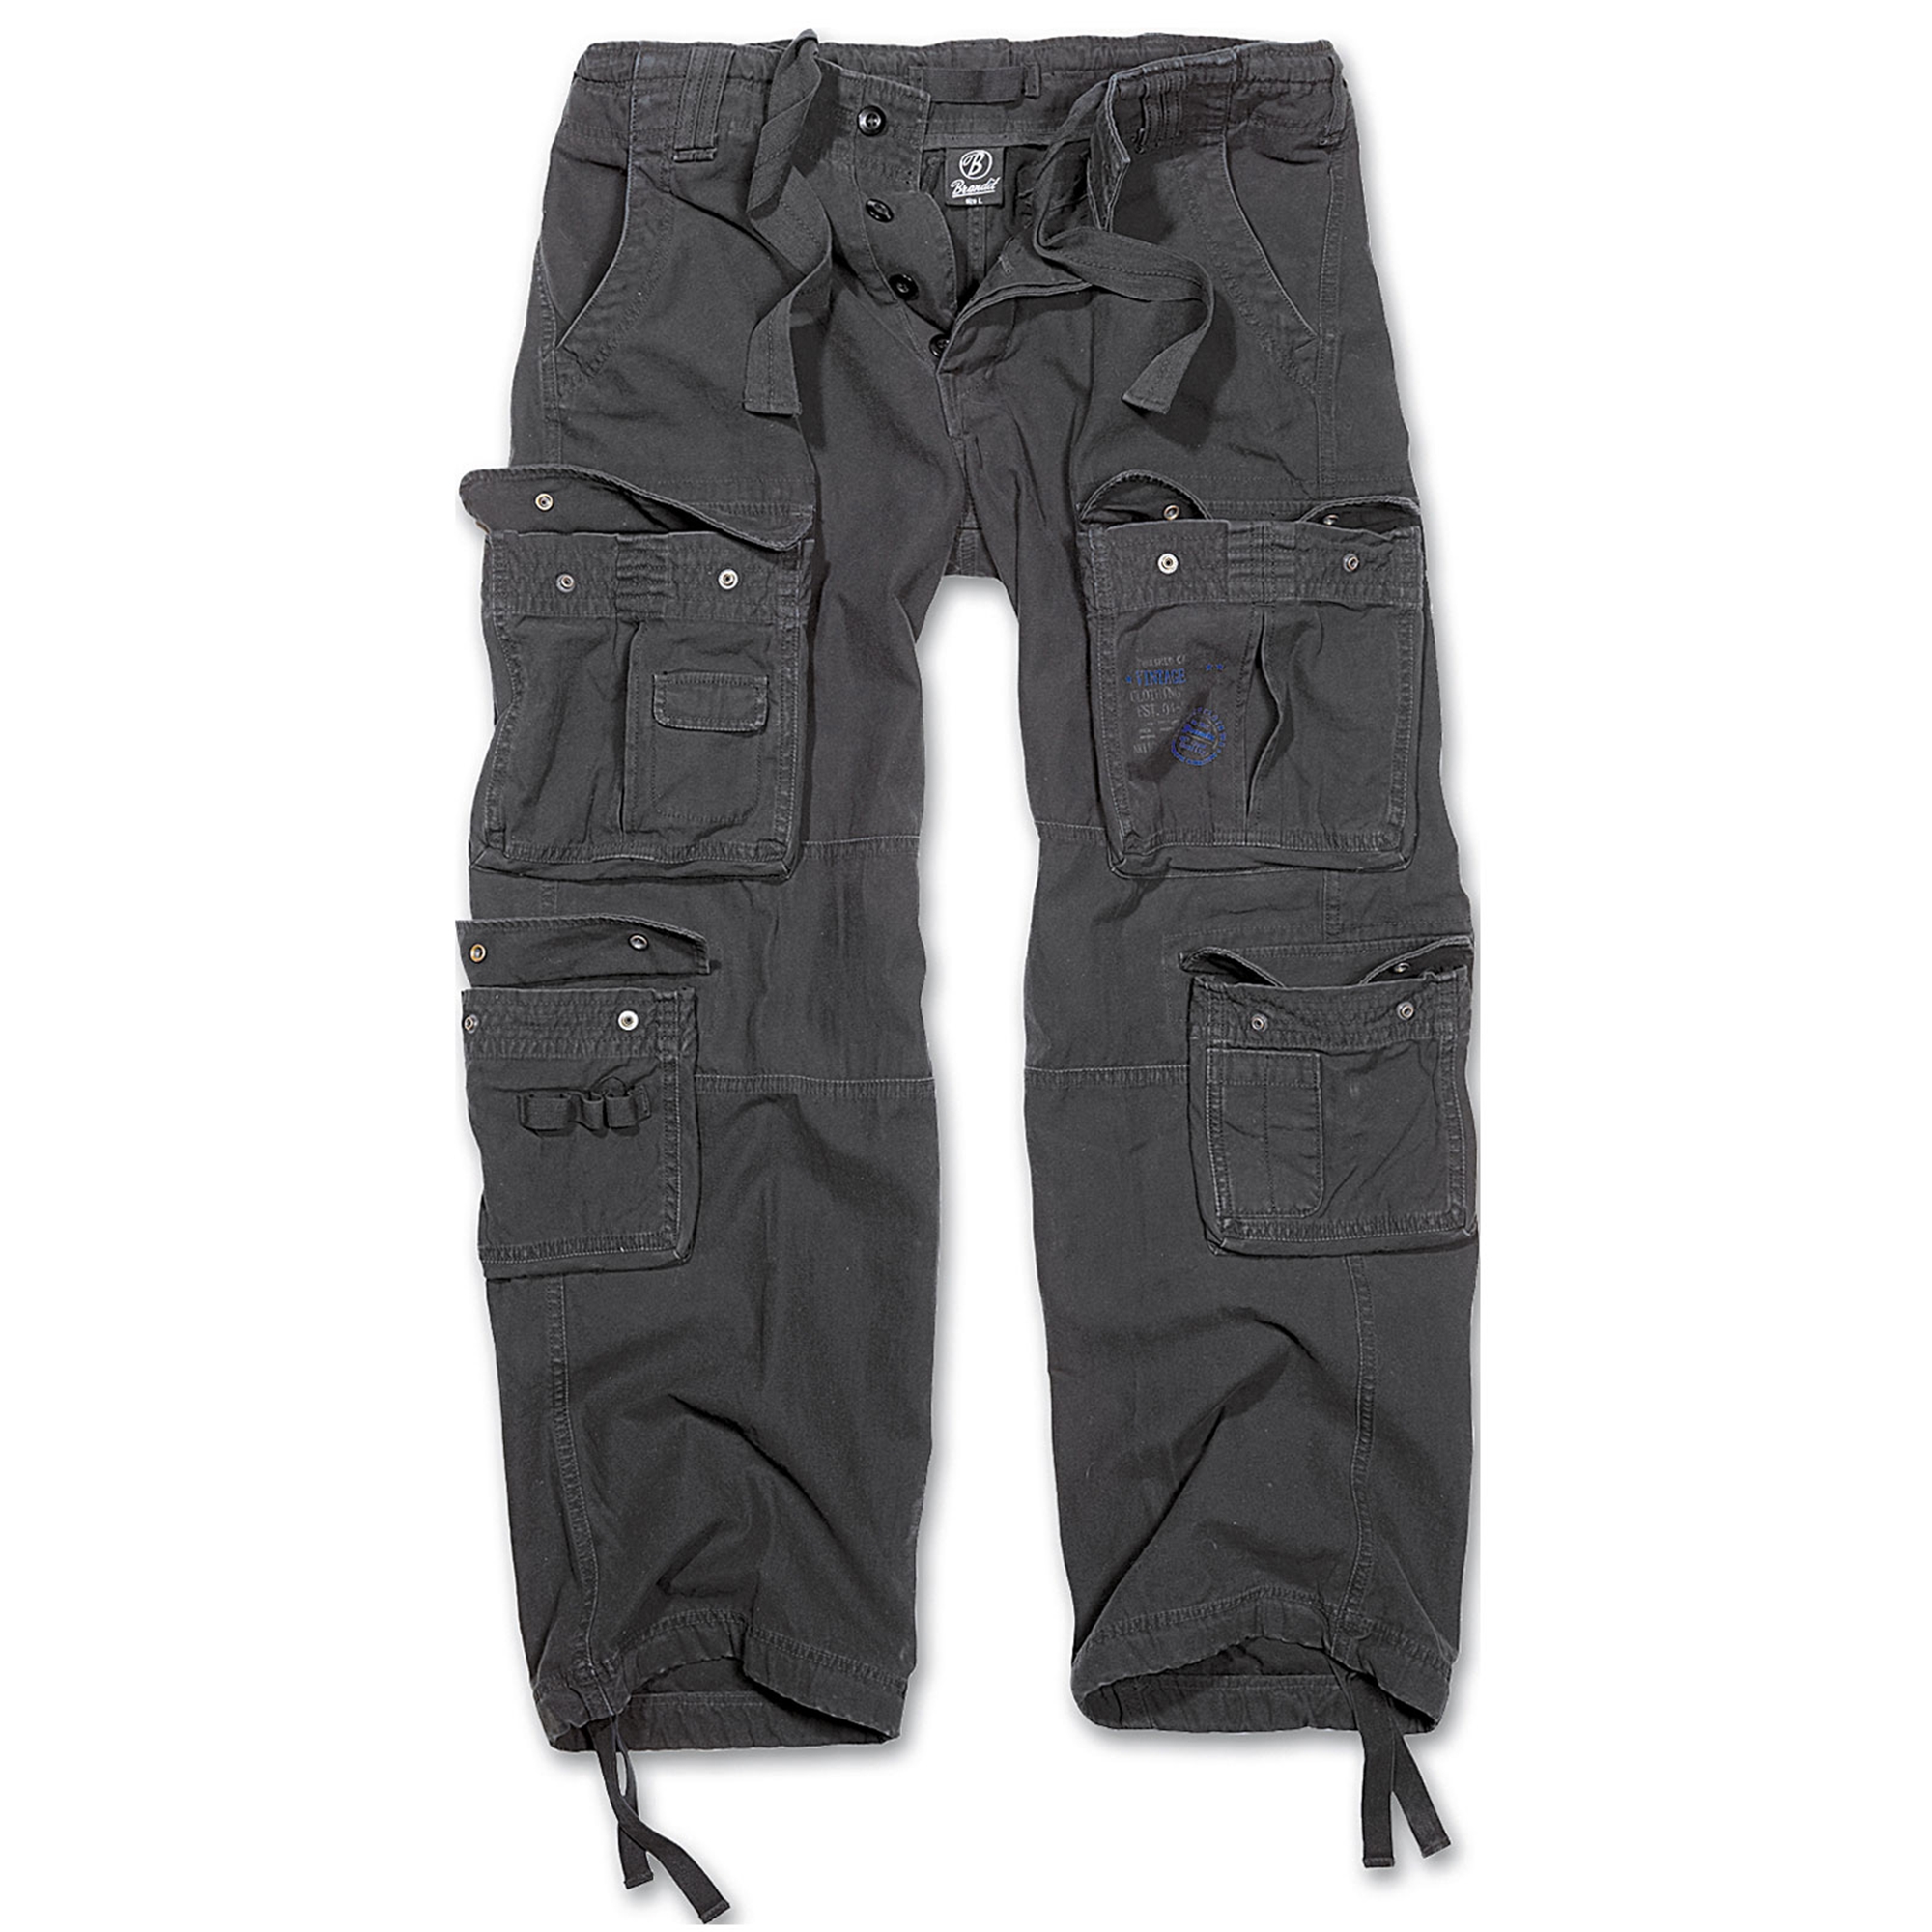 Trousers Ranger Herren Brandit Hose Vintage | eBay Cargohose Pure Army S-7XL Cargo US